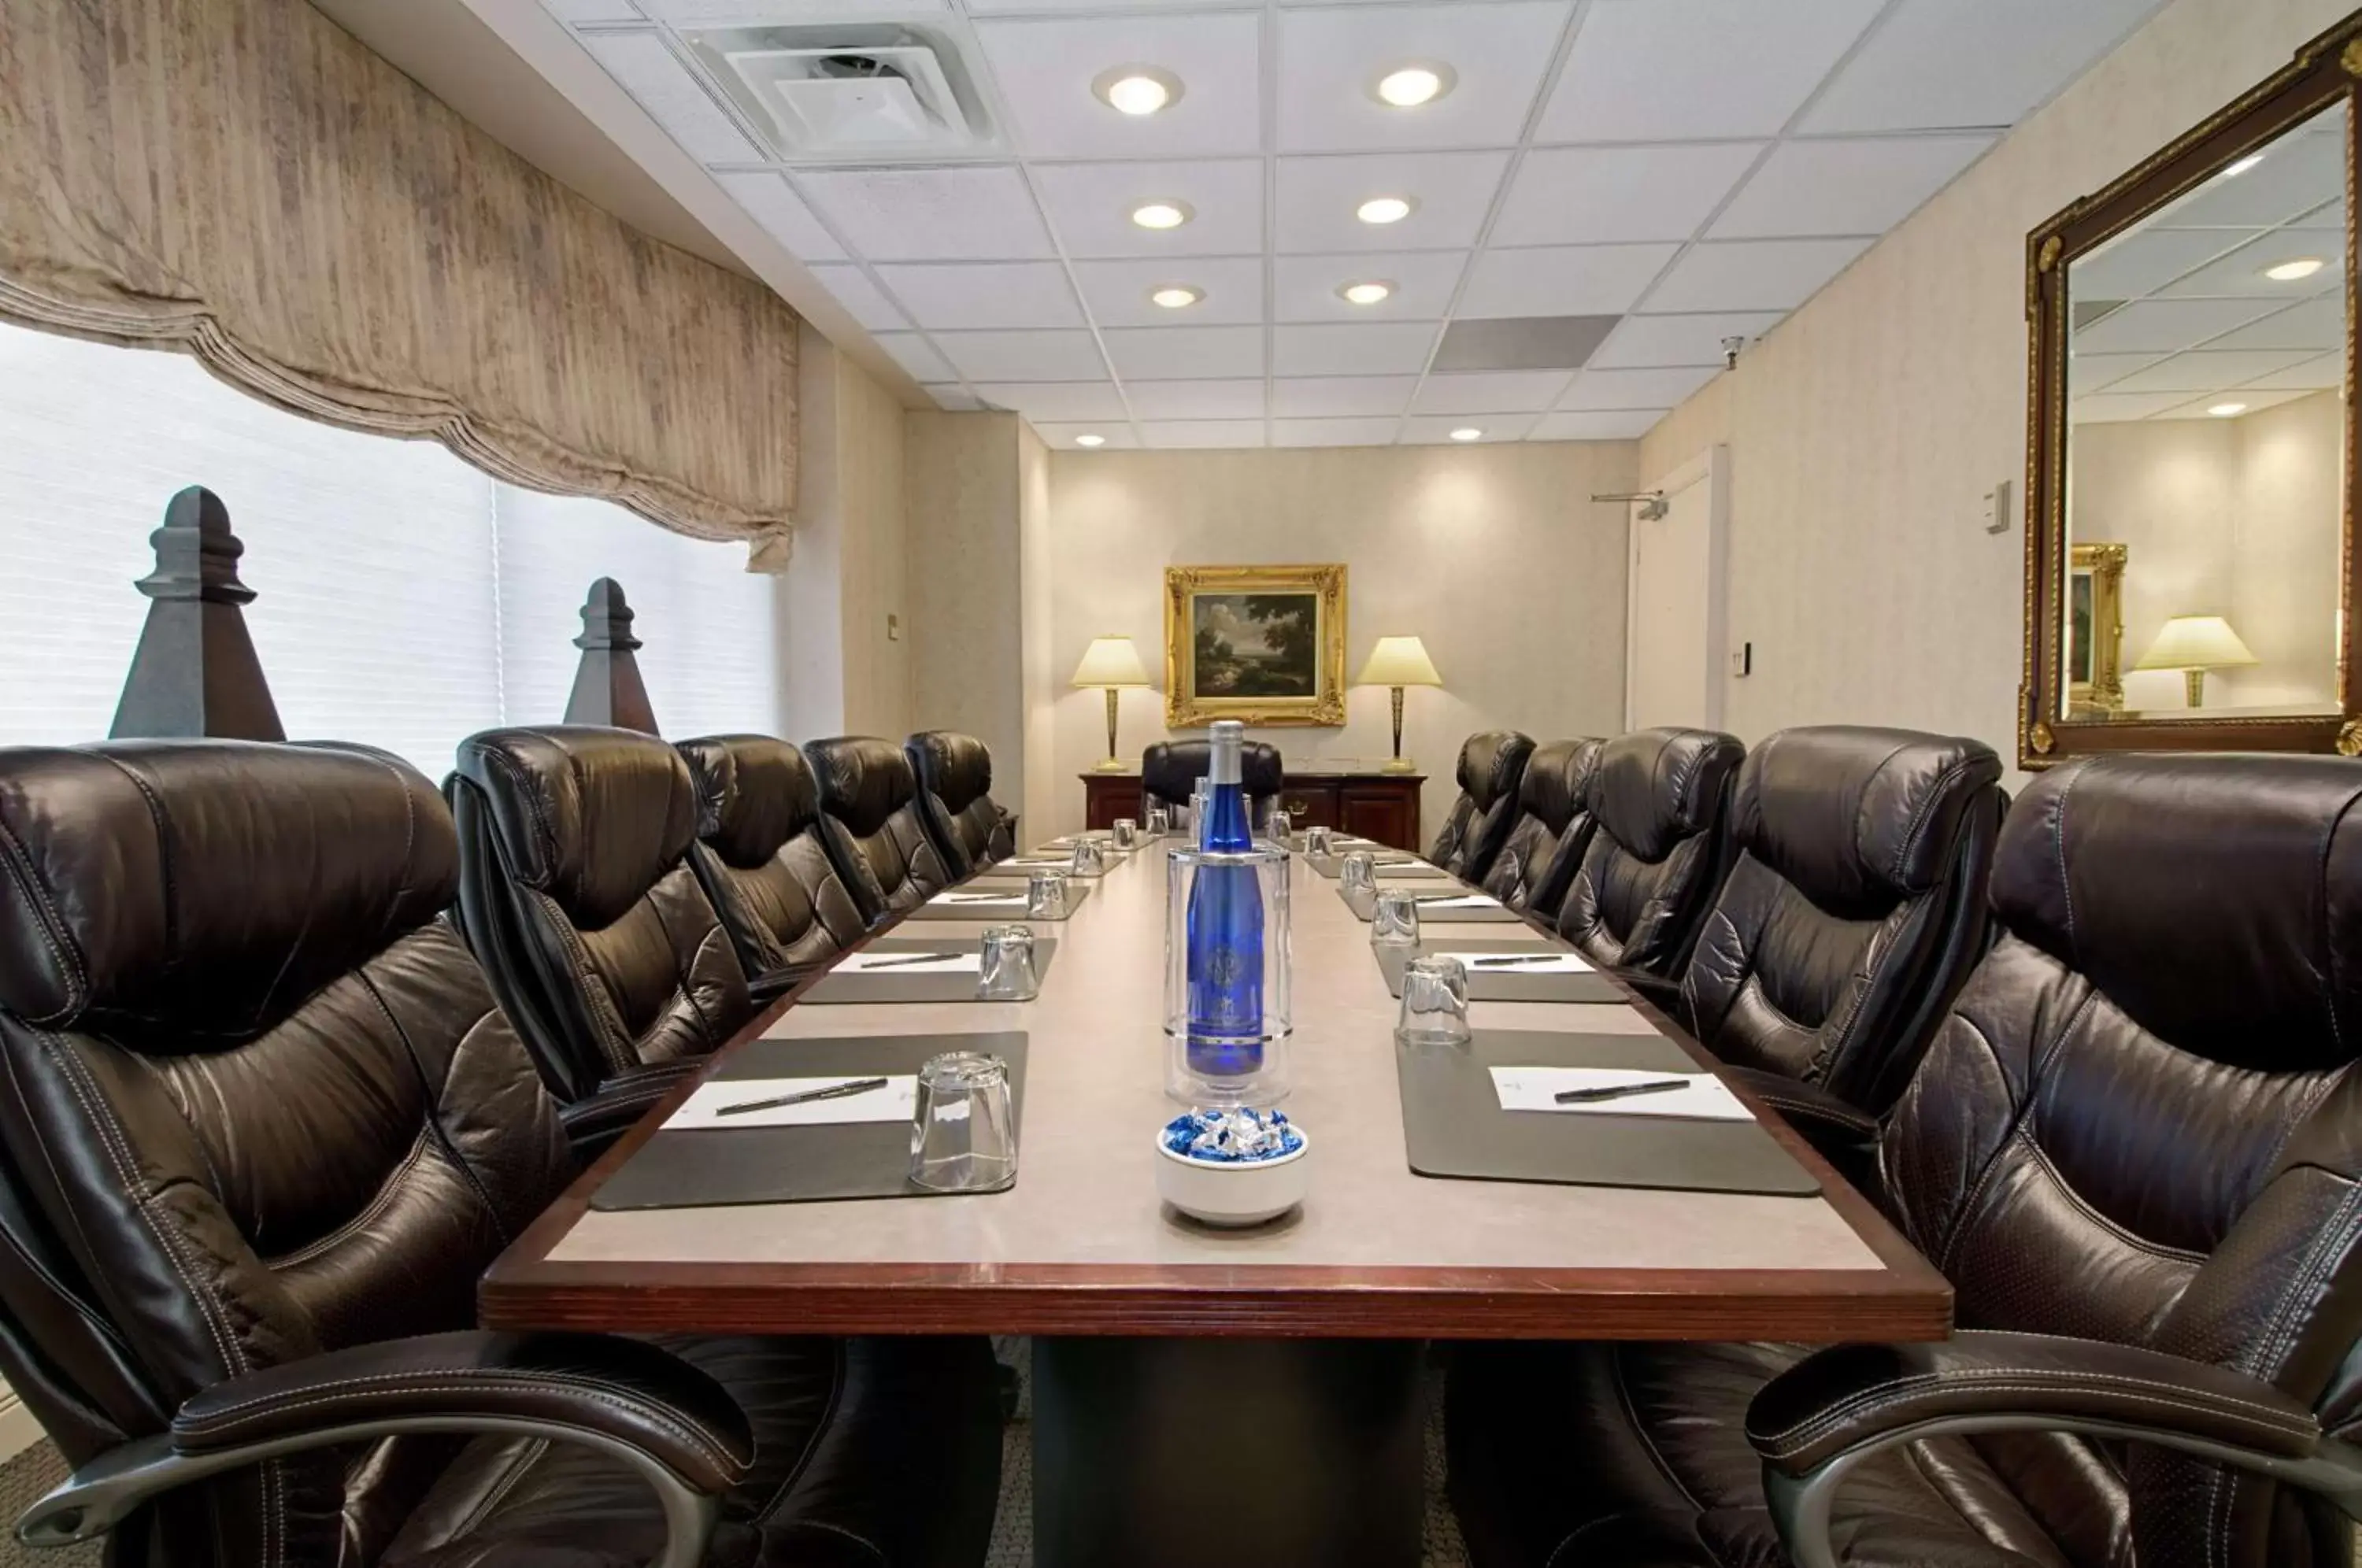 Meeting/conference room in Hilton Cincinnati Netherland Plaza